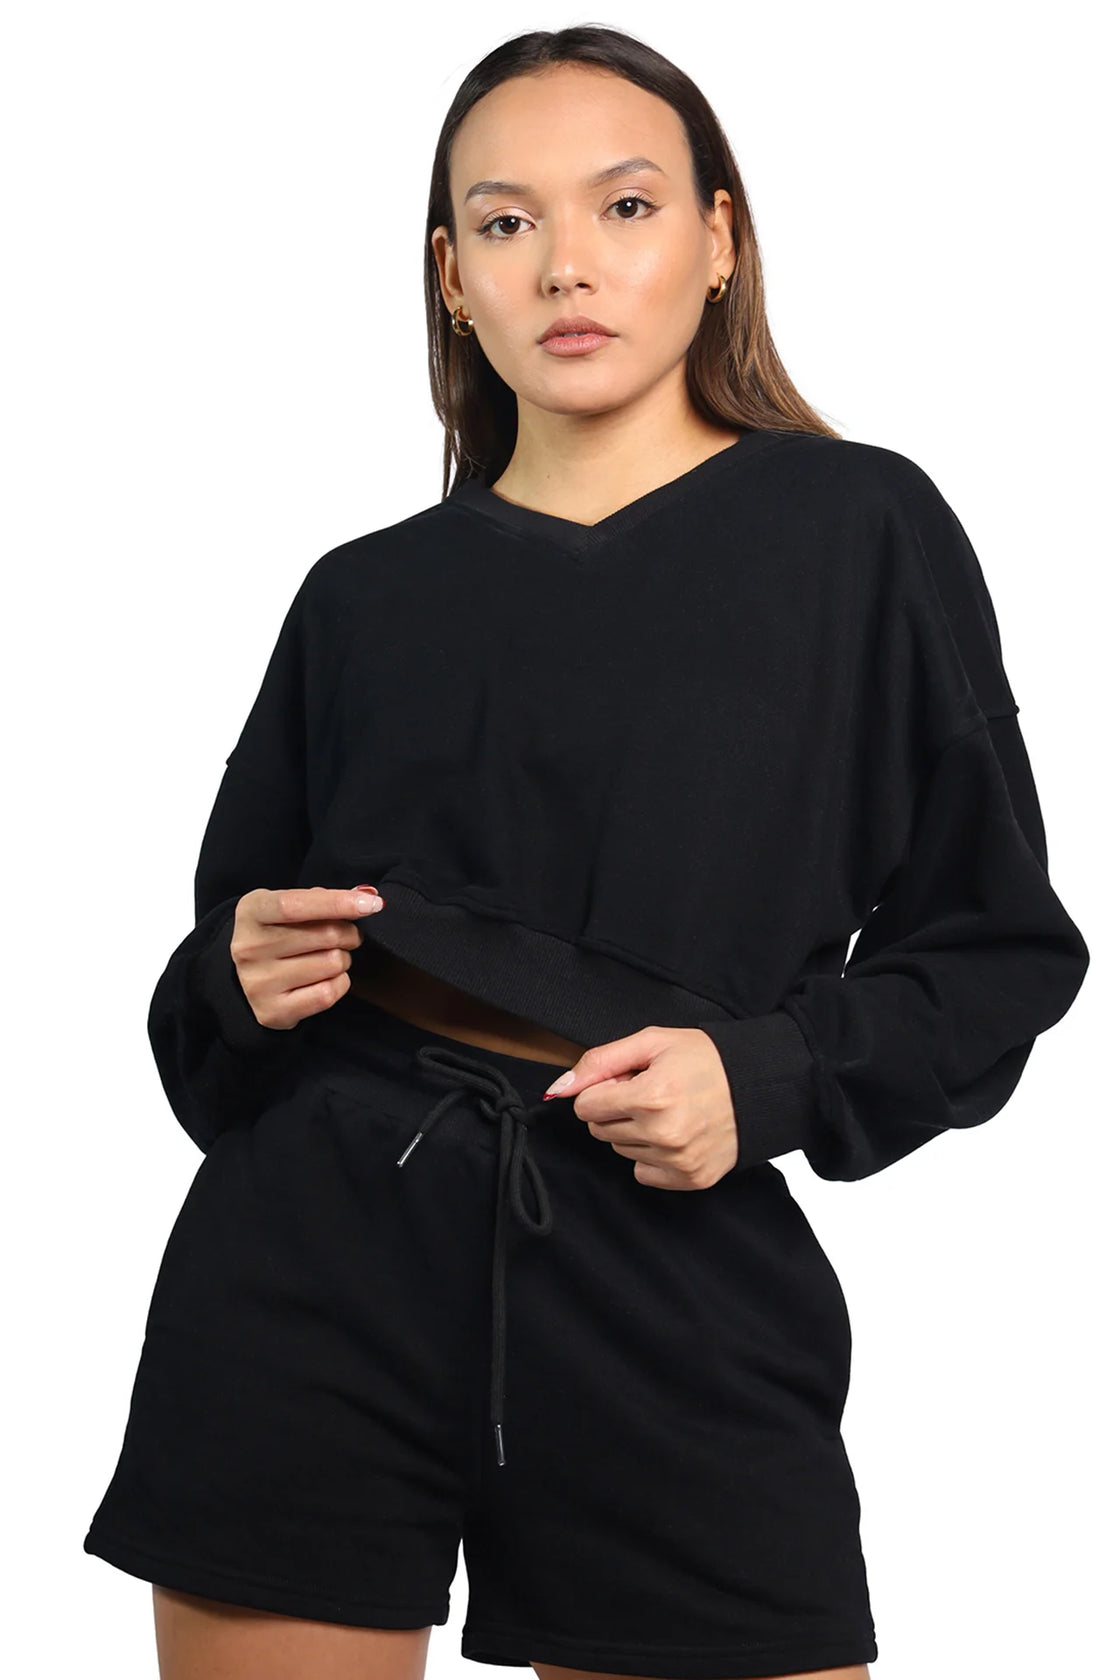 Oversize V-neck black pullover